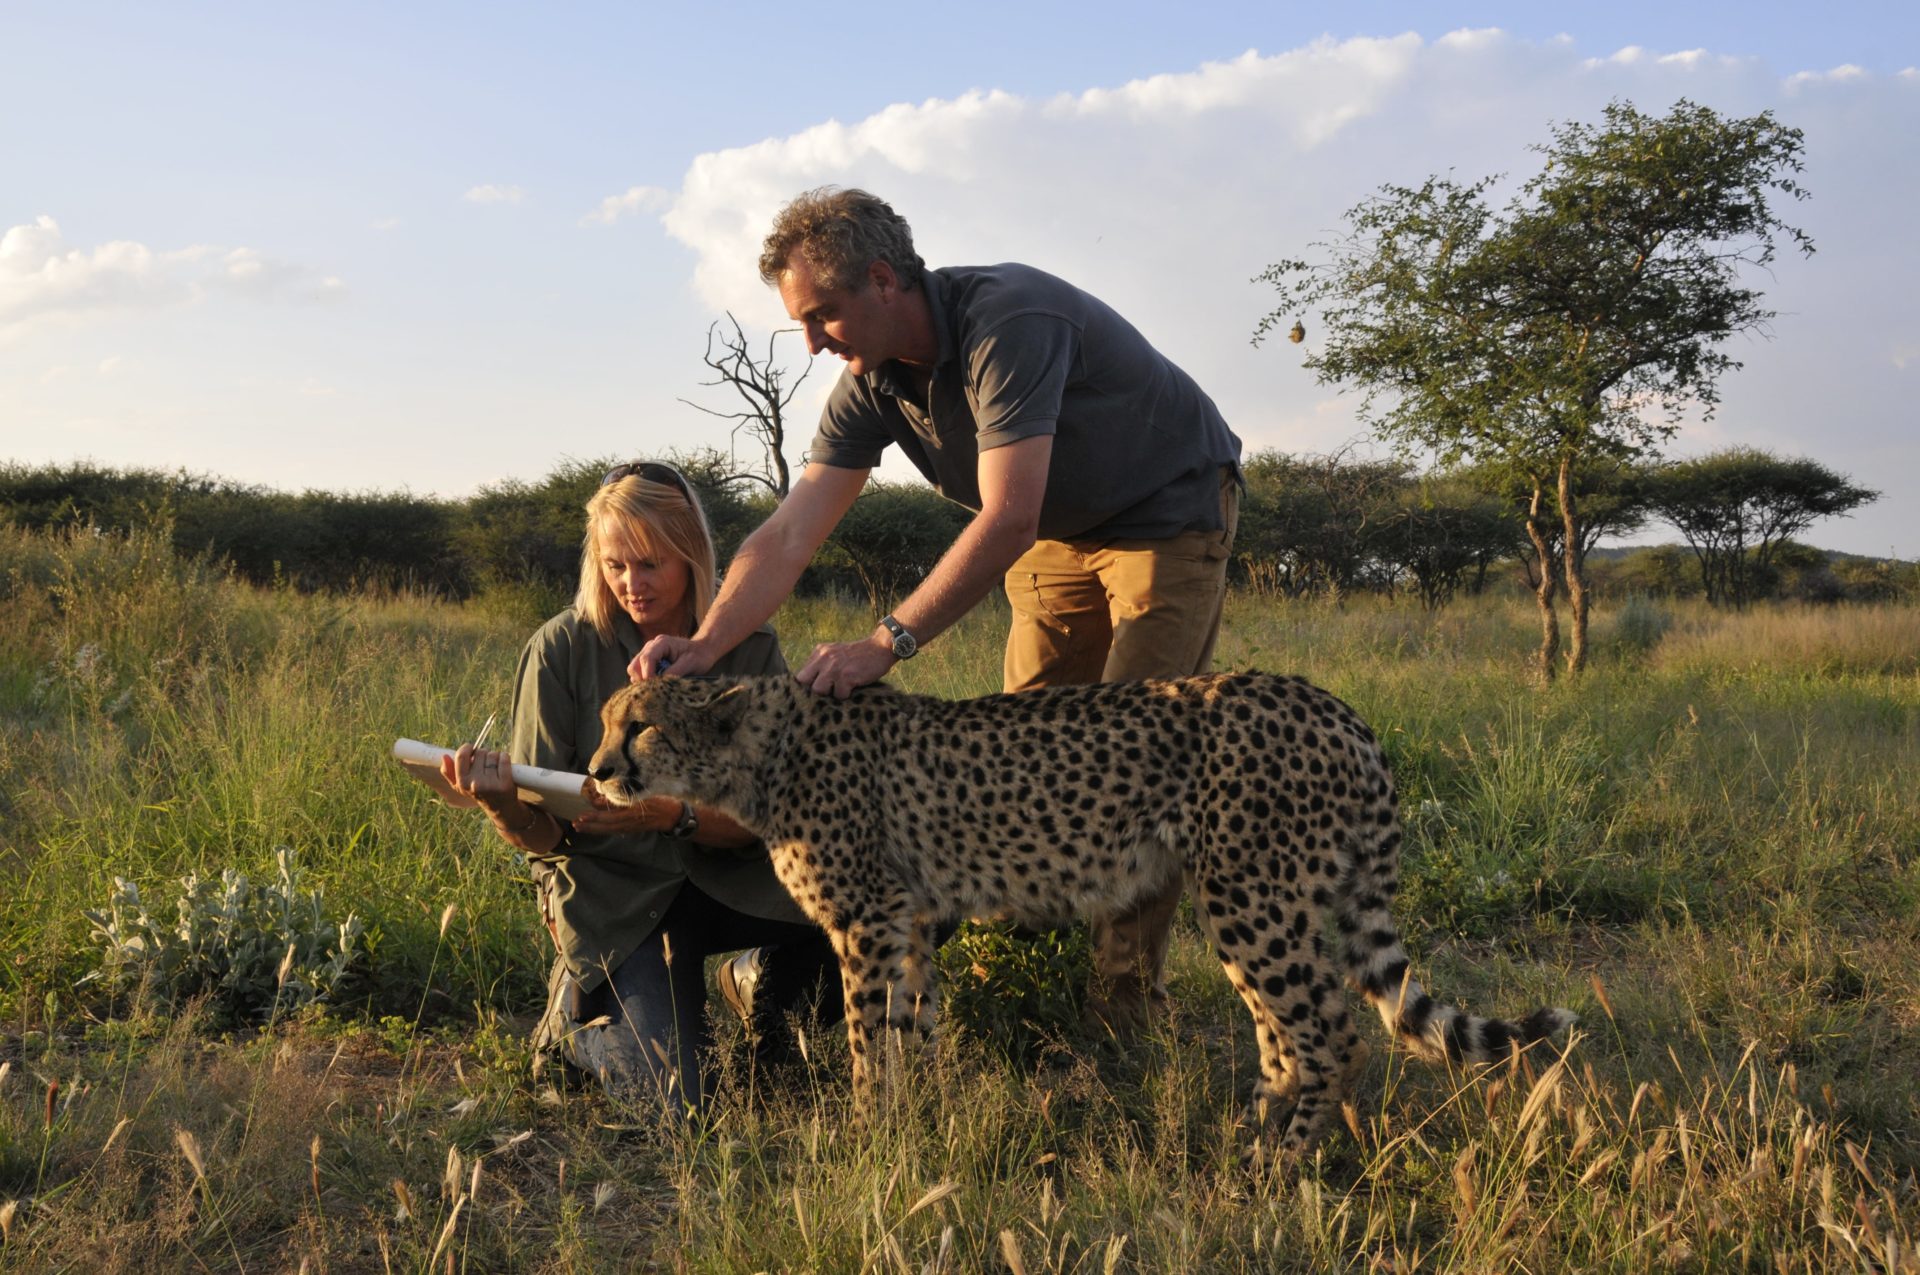 Hamish with wild cheetah